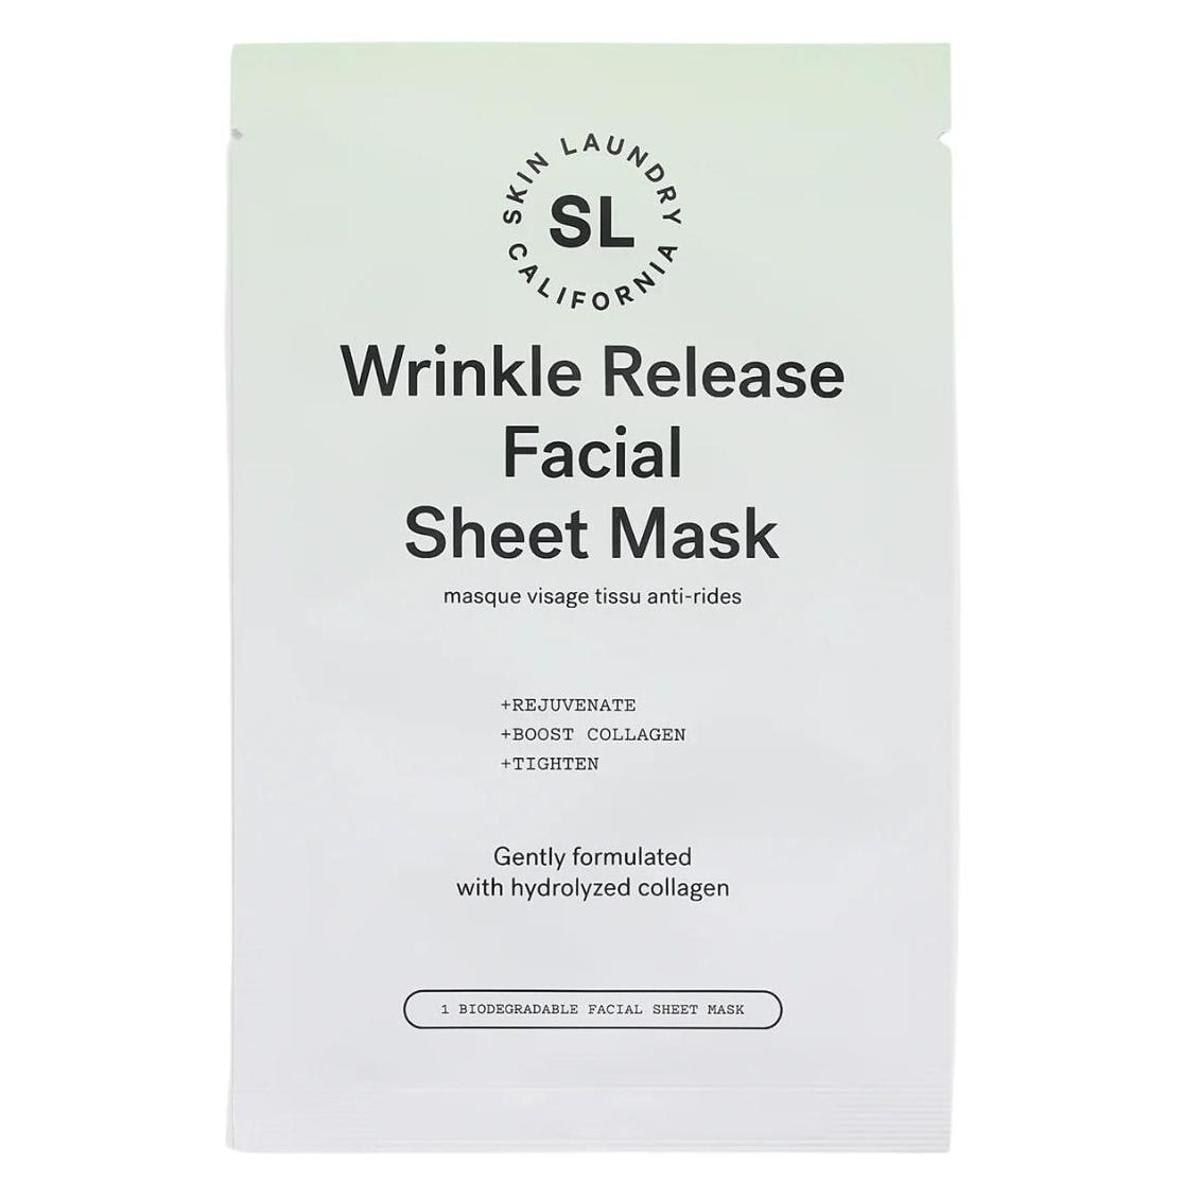 Skin Laundry's Wrinkle Release Facial Sheet Mask